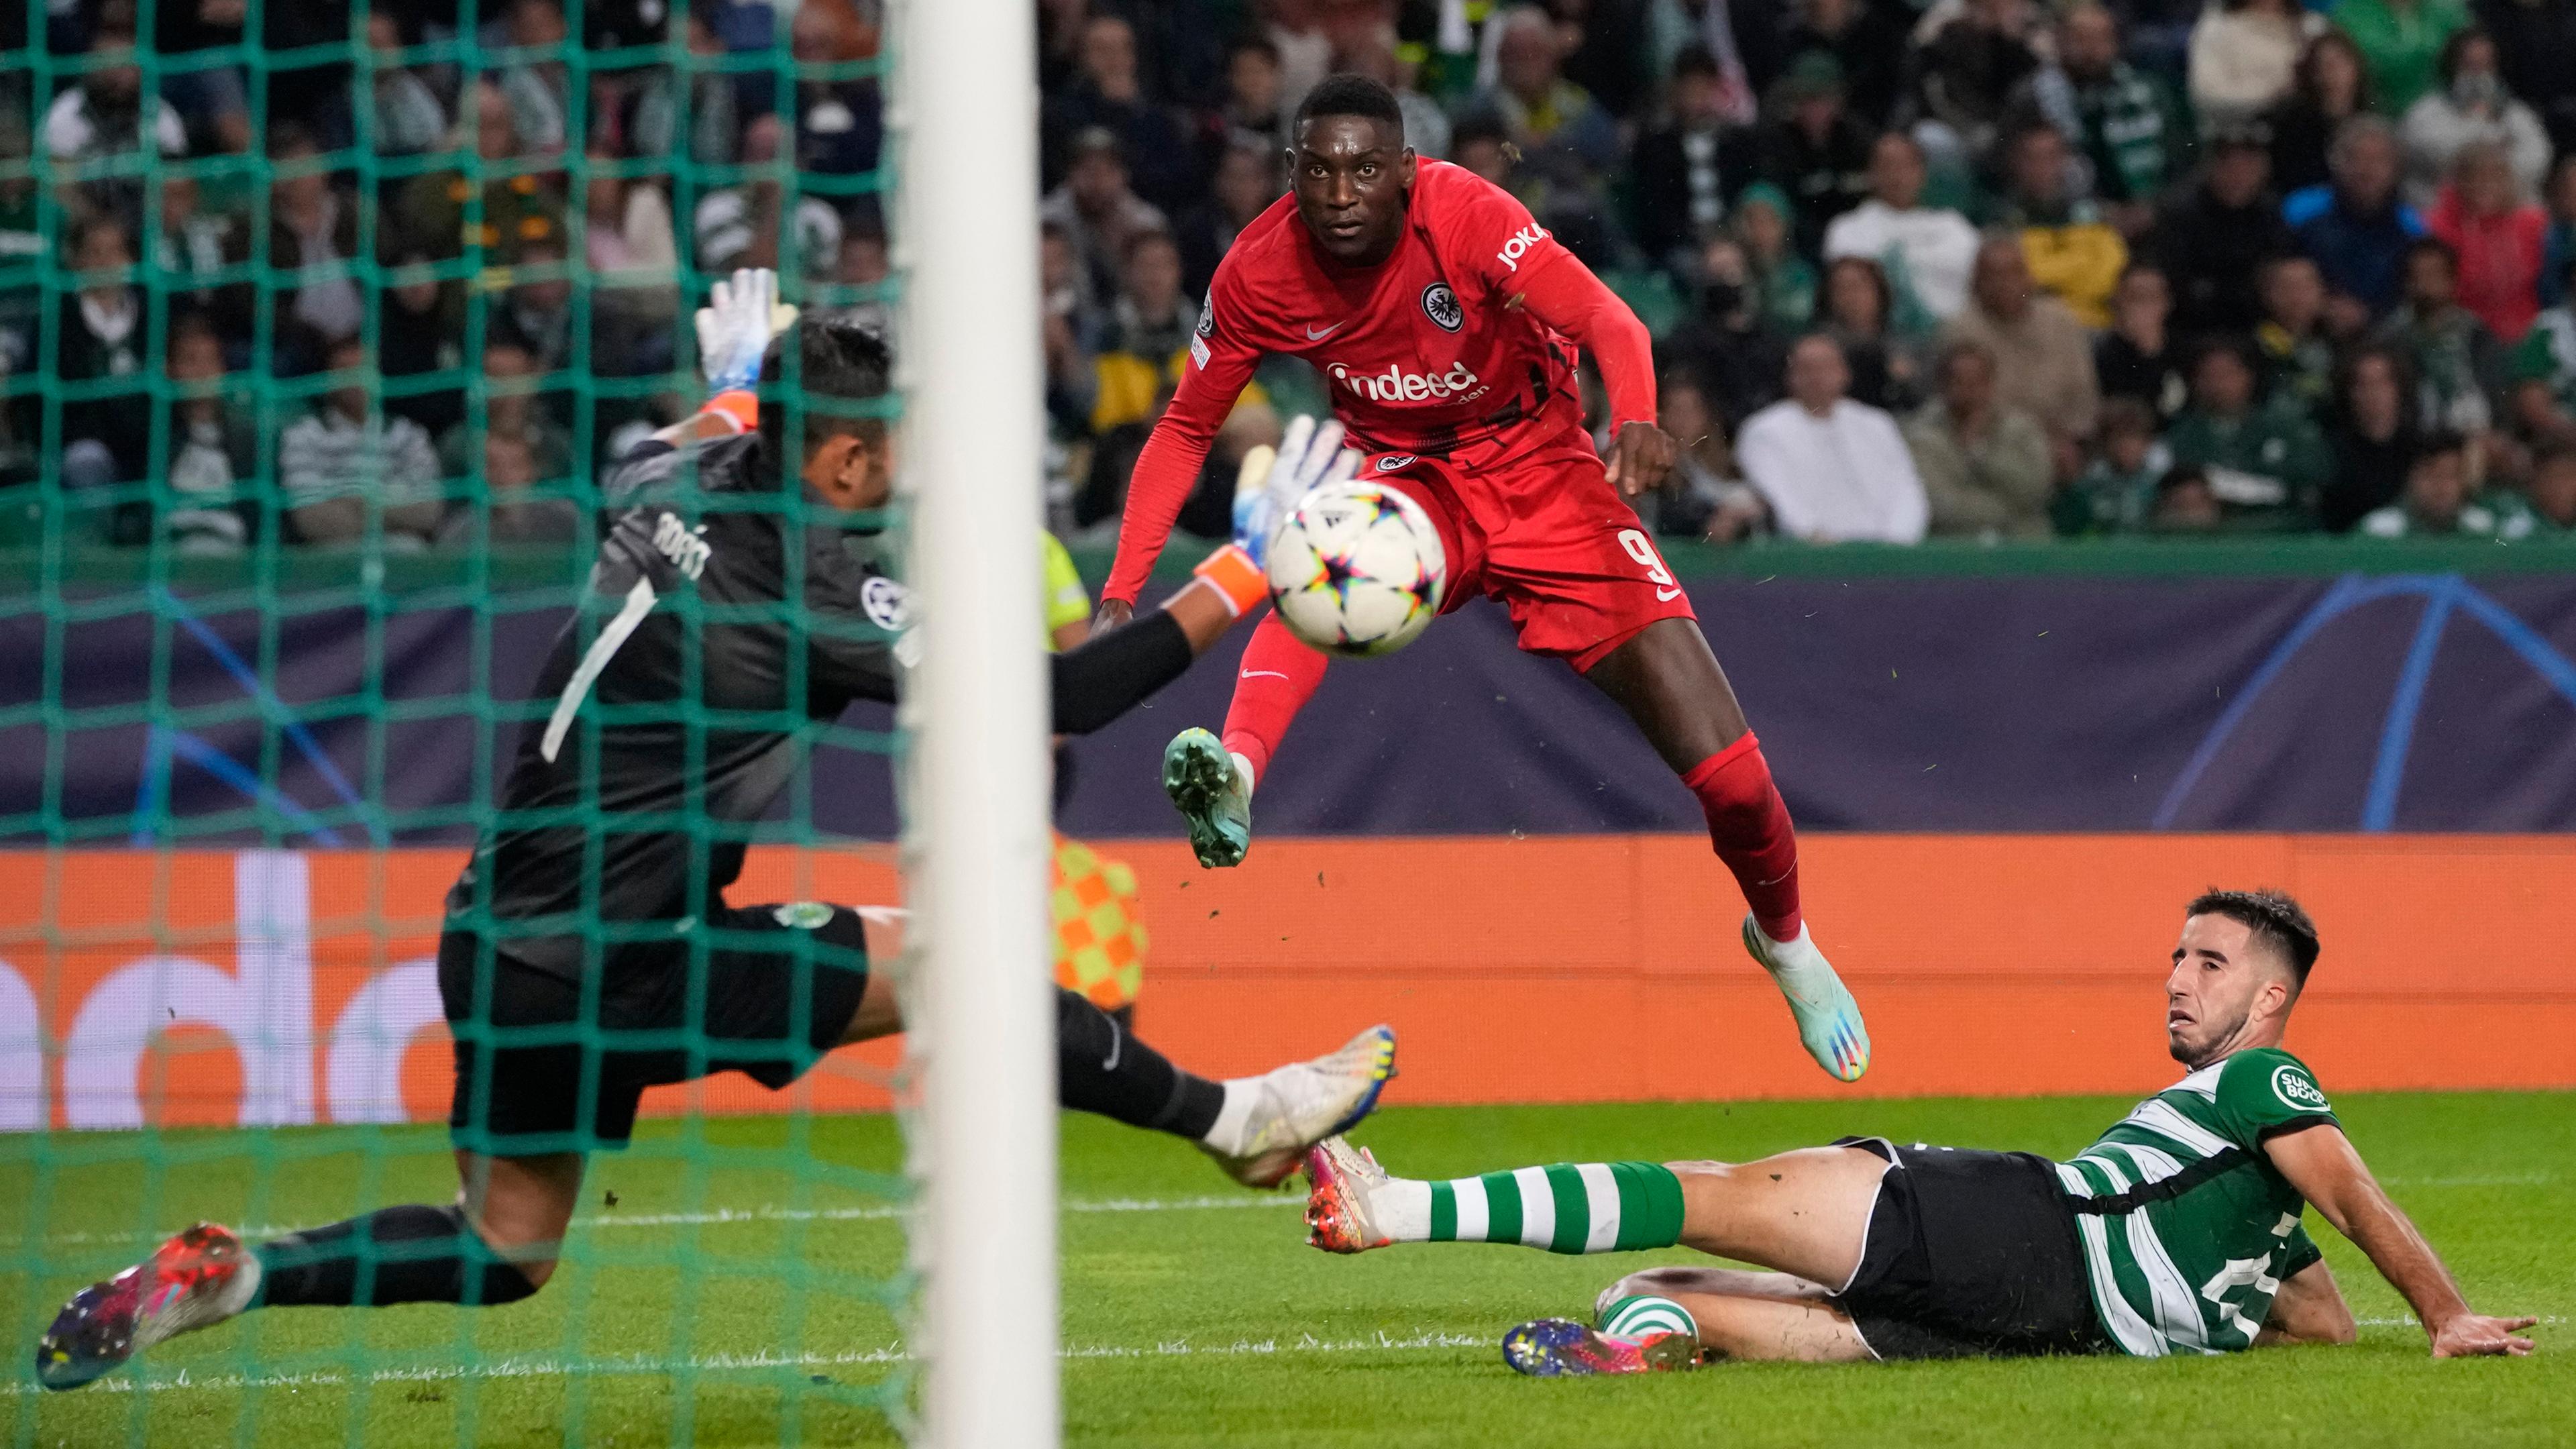 Fußball-Champions-League, Sporting Lissabon - Eintracht Frankfurt: Der Frankfurter Randal Kolo Muani schießt das 2:1-Siegtor.